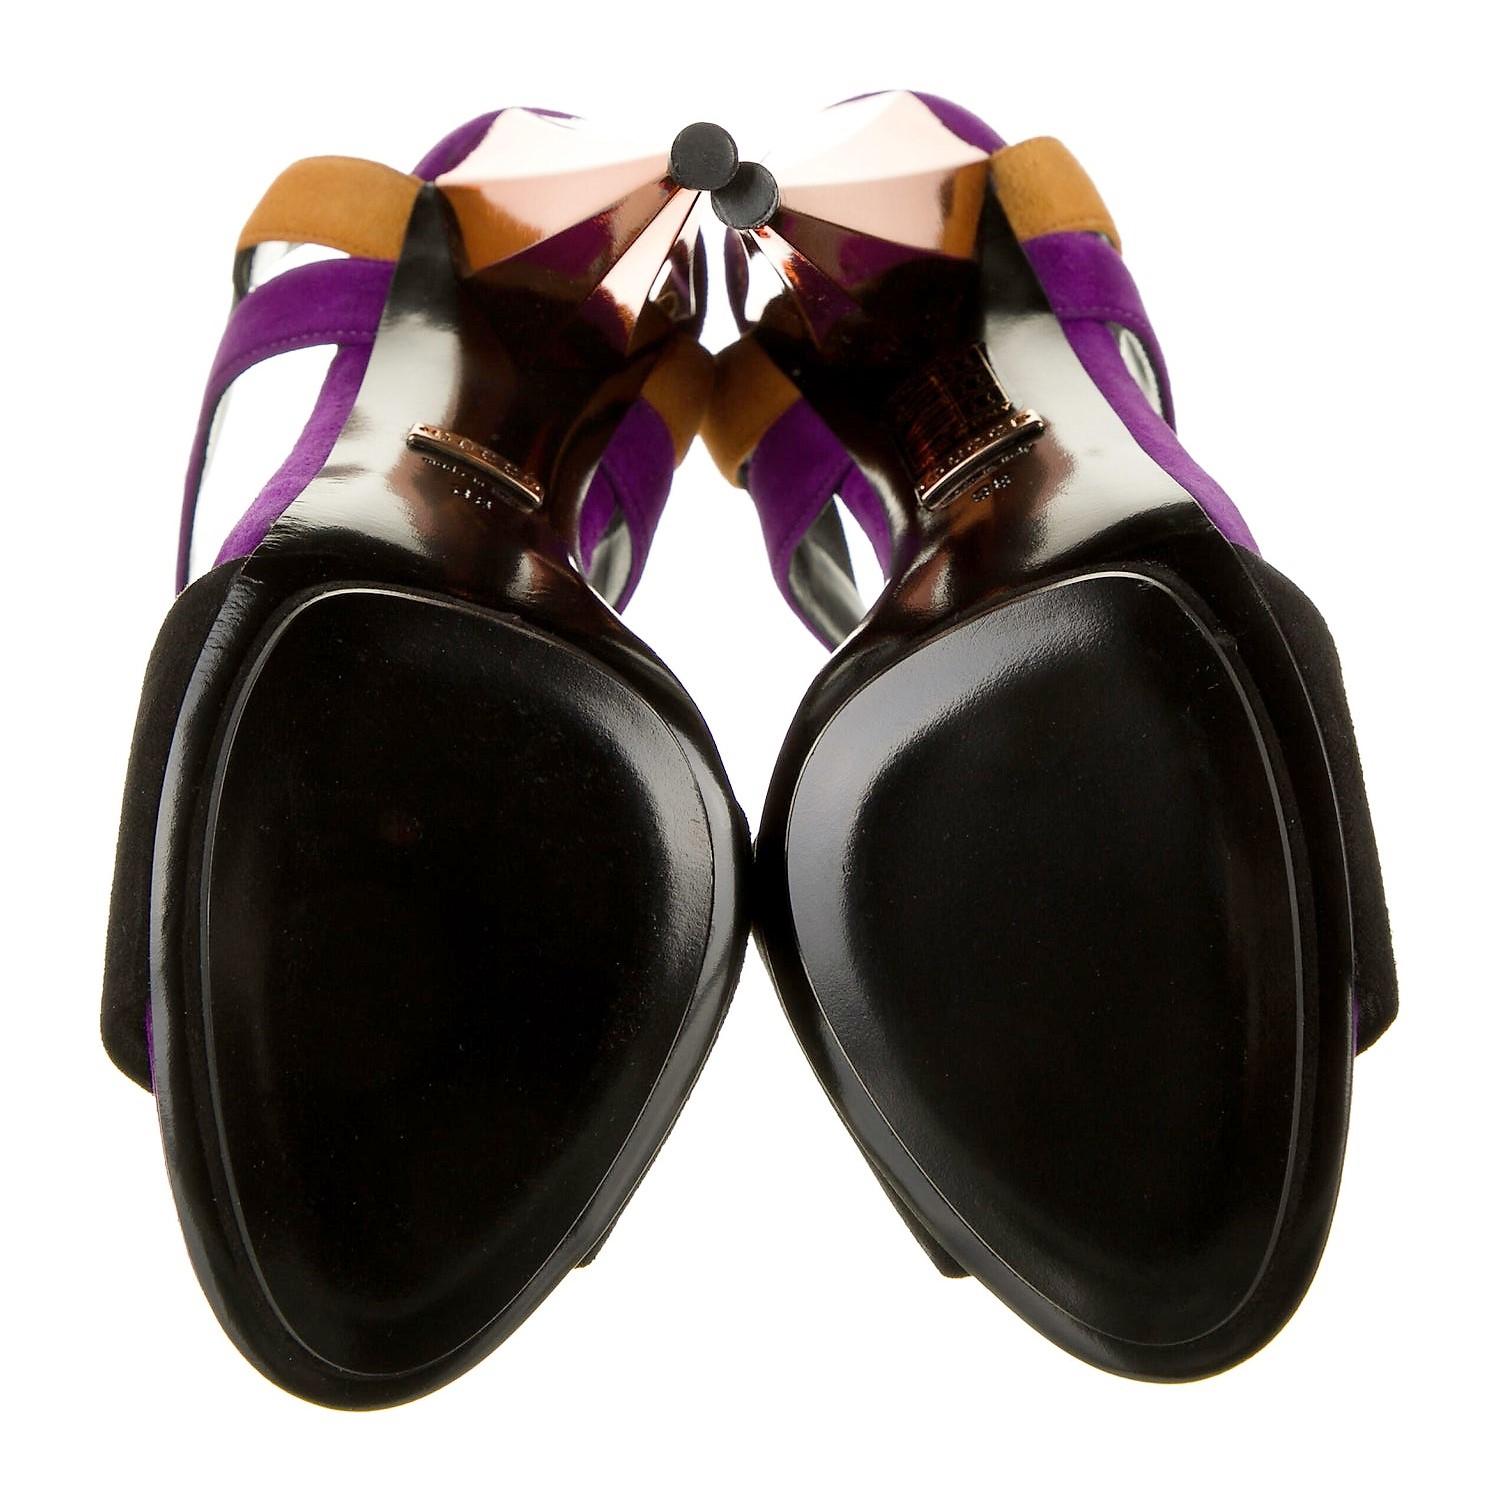 New Gucci Ad Runway 2014 Purple Orange Suede Mirrored Pump Heels Sz 37.5 For Sale 5